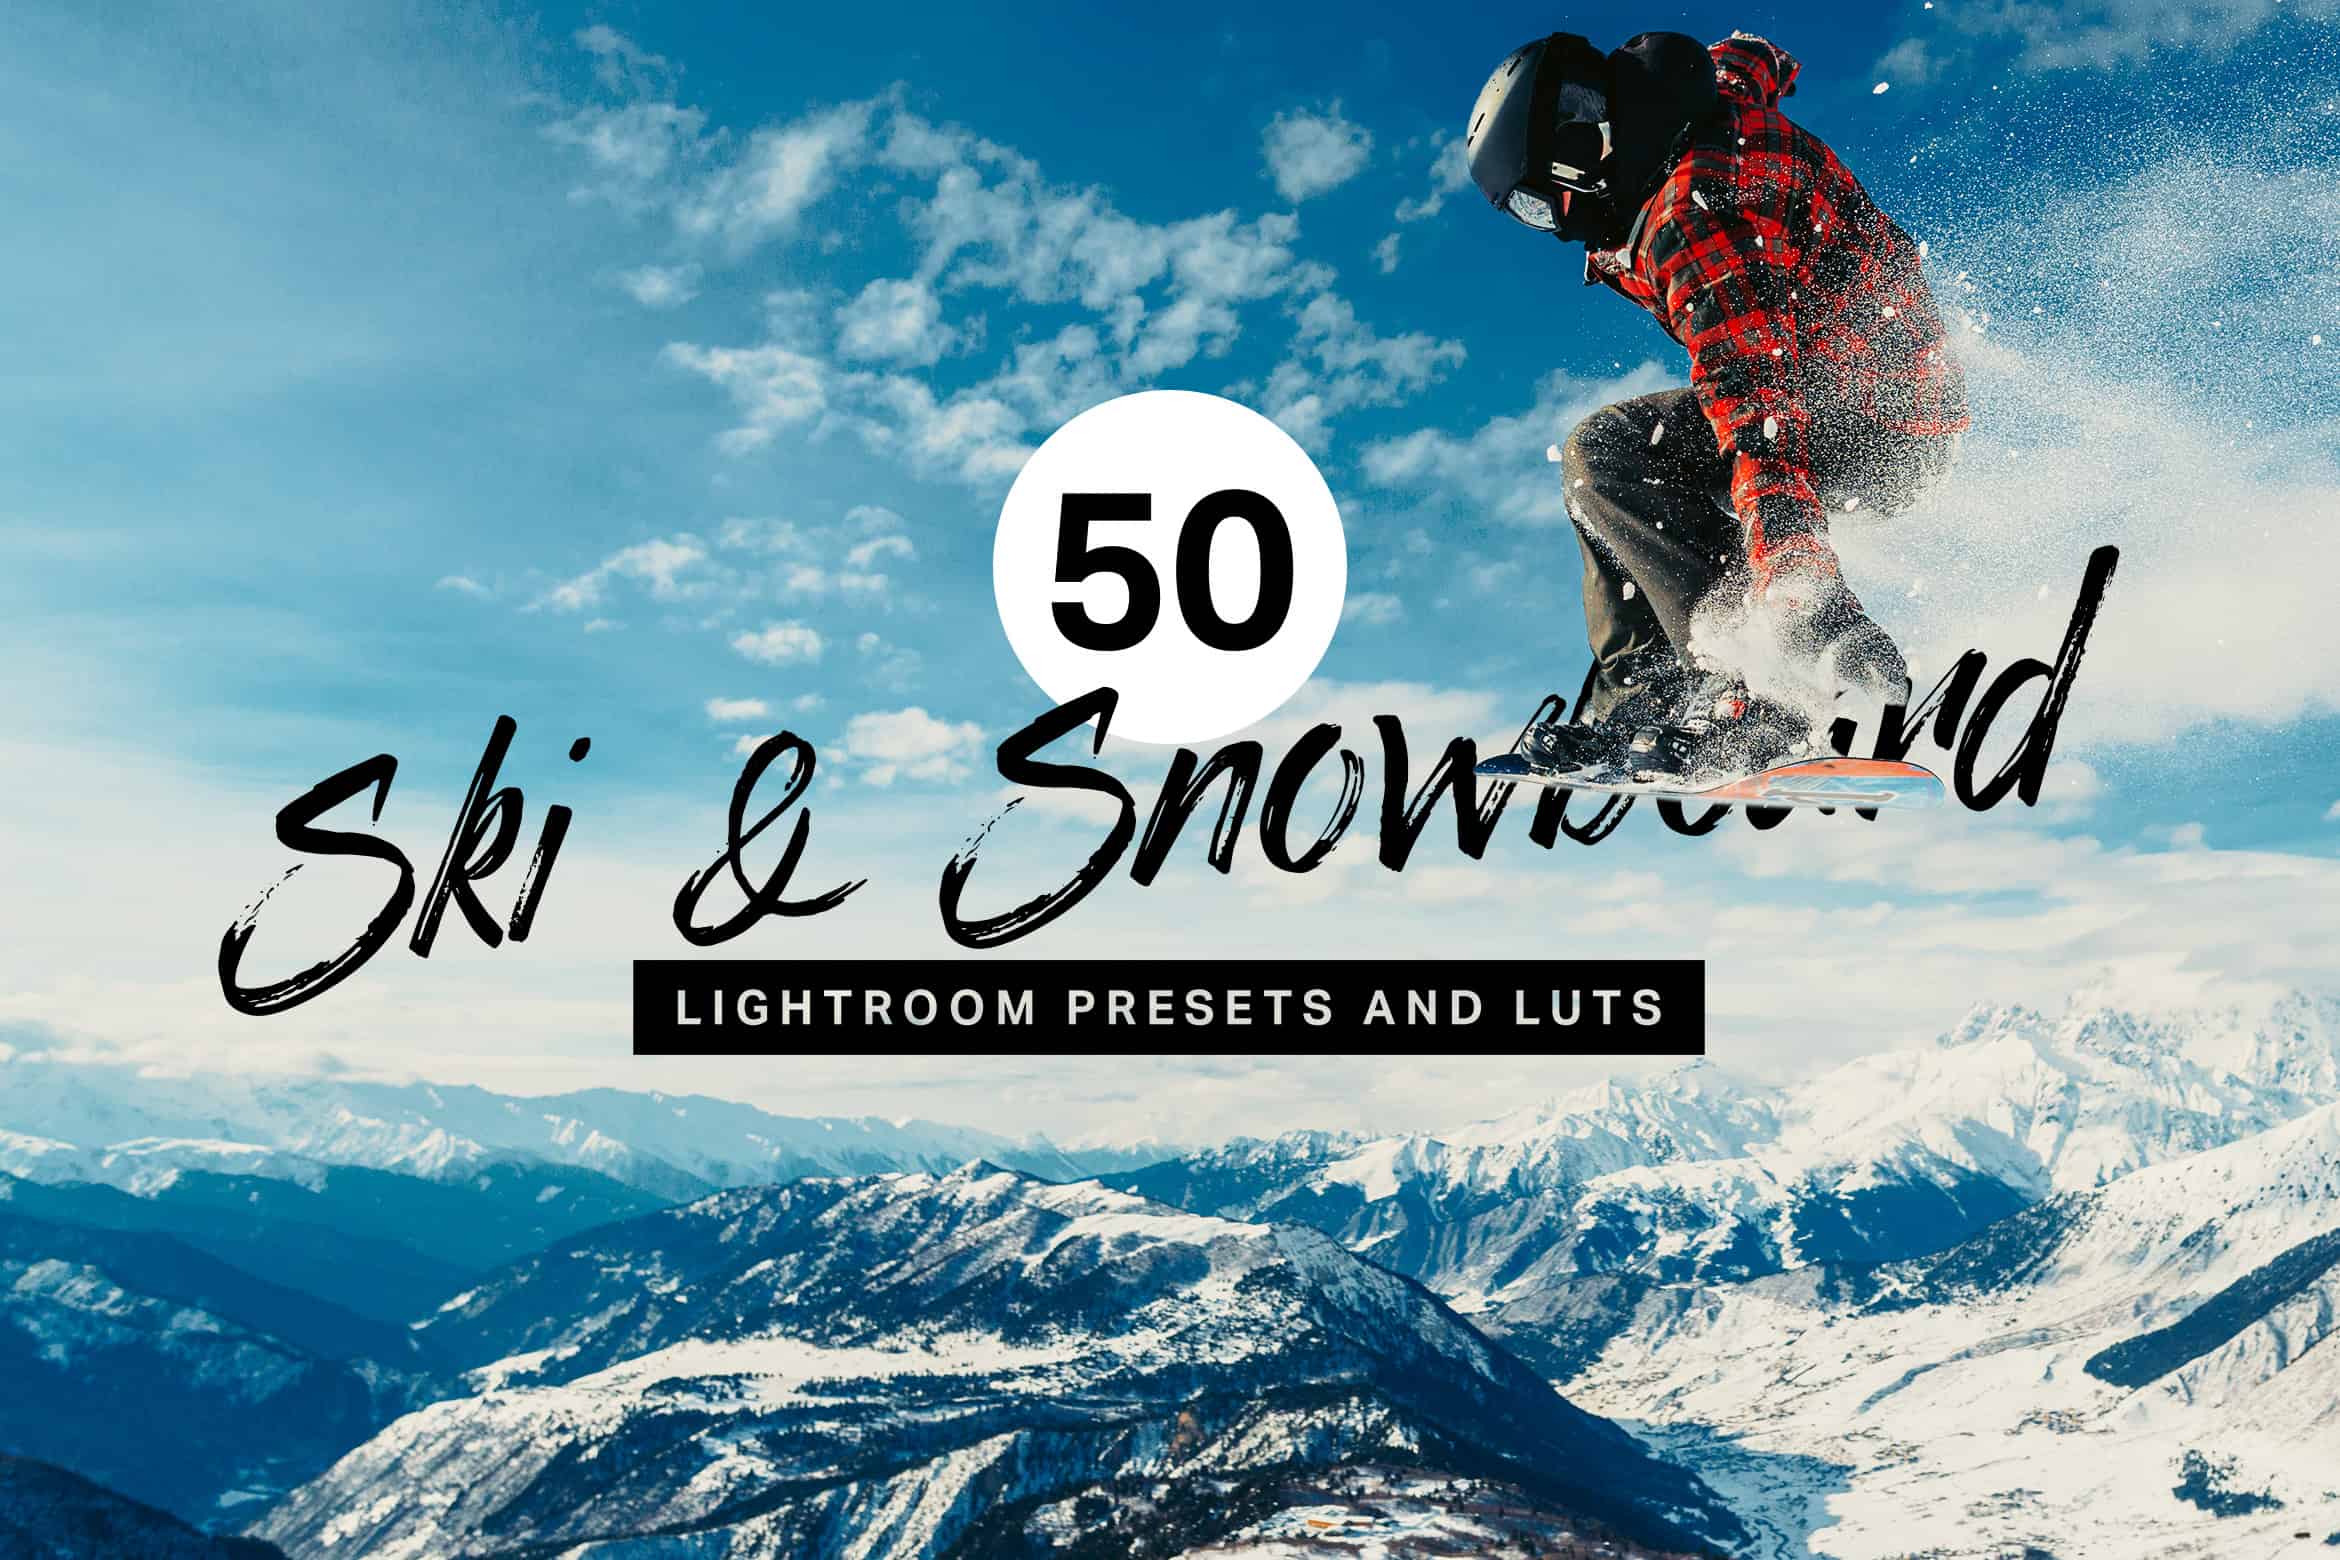 50 Ski & Snowboard Lightroom Presets and LUTs